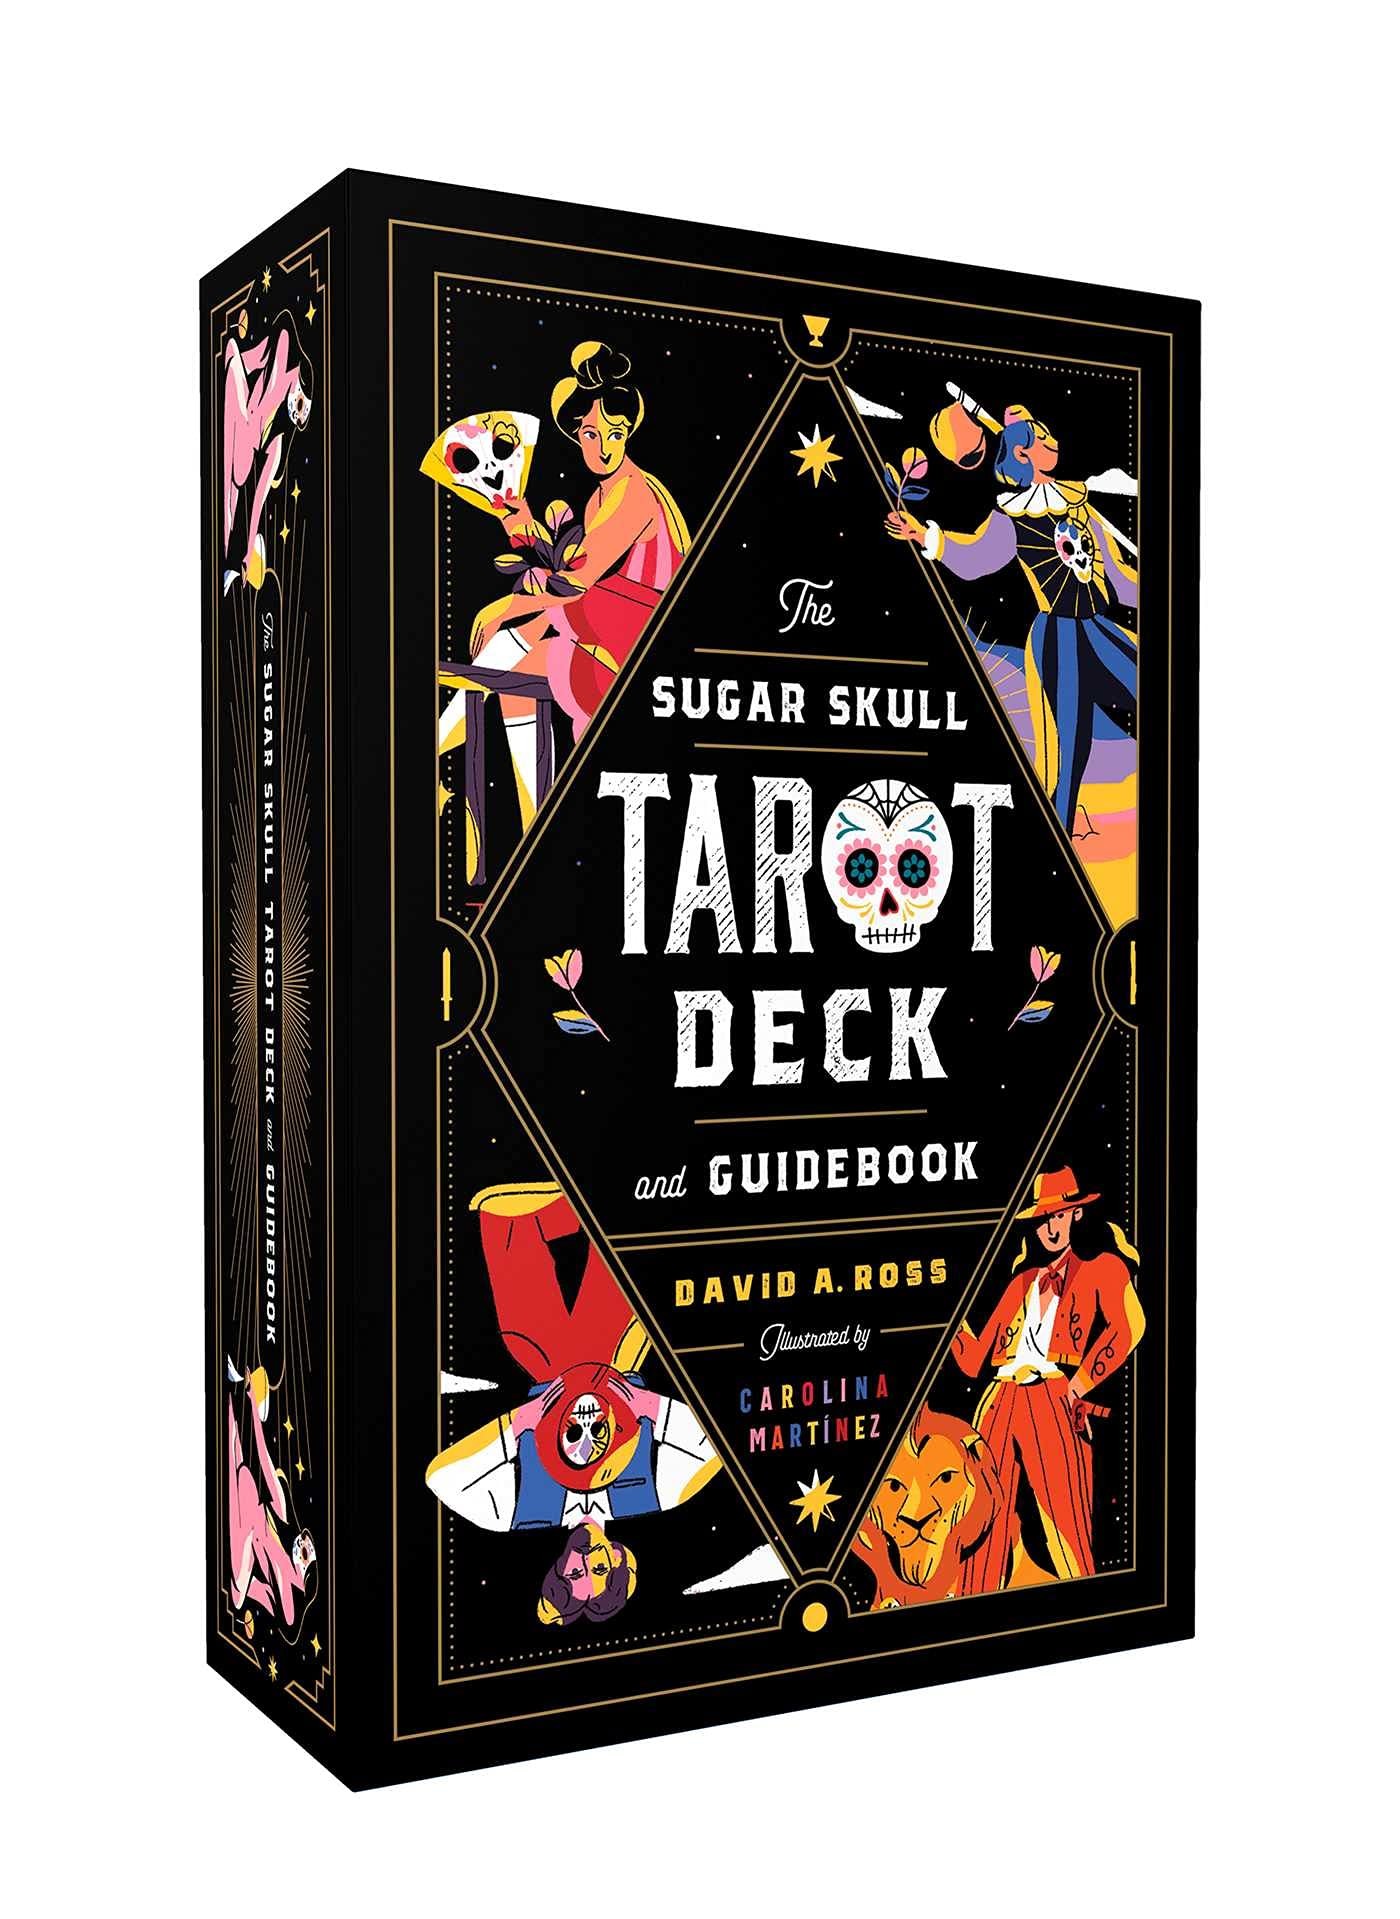 Carolina, Ross, David A ; Martinez The Sugar Skull Tarot Deck and Guidebook [With Guide Book] 